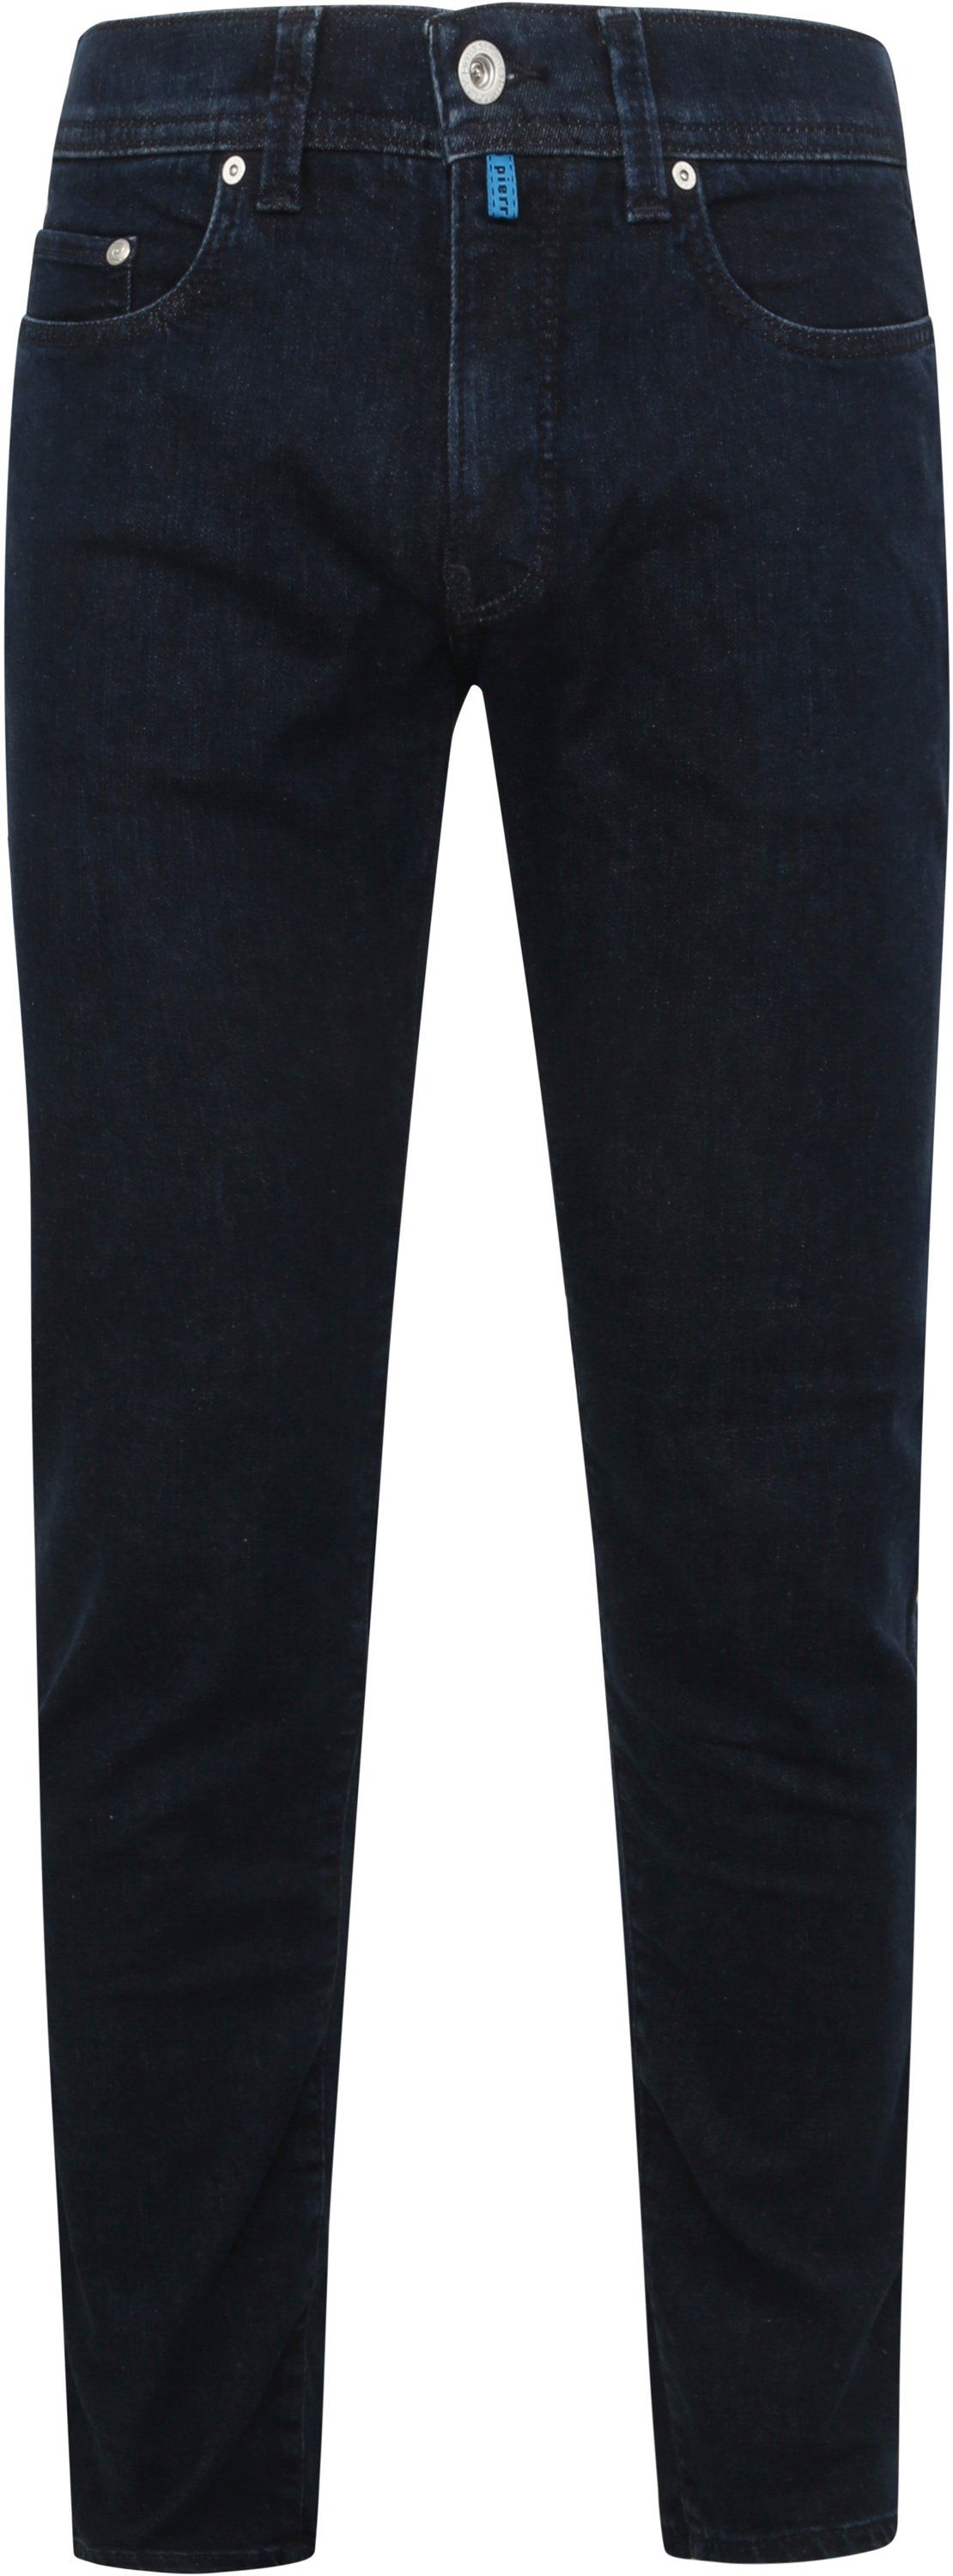 Pierre Cardin Jeans Lyon Tapered Future Flex Donkerblauw Dark Blue Blue size W 31